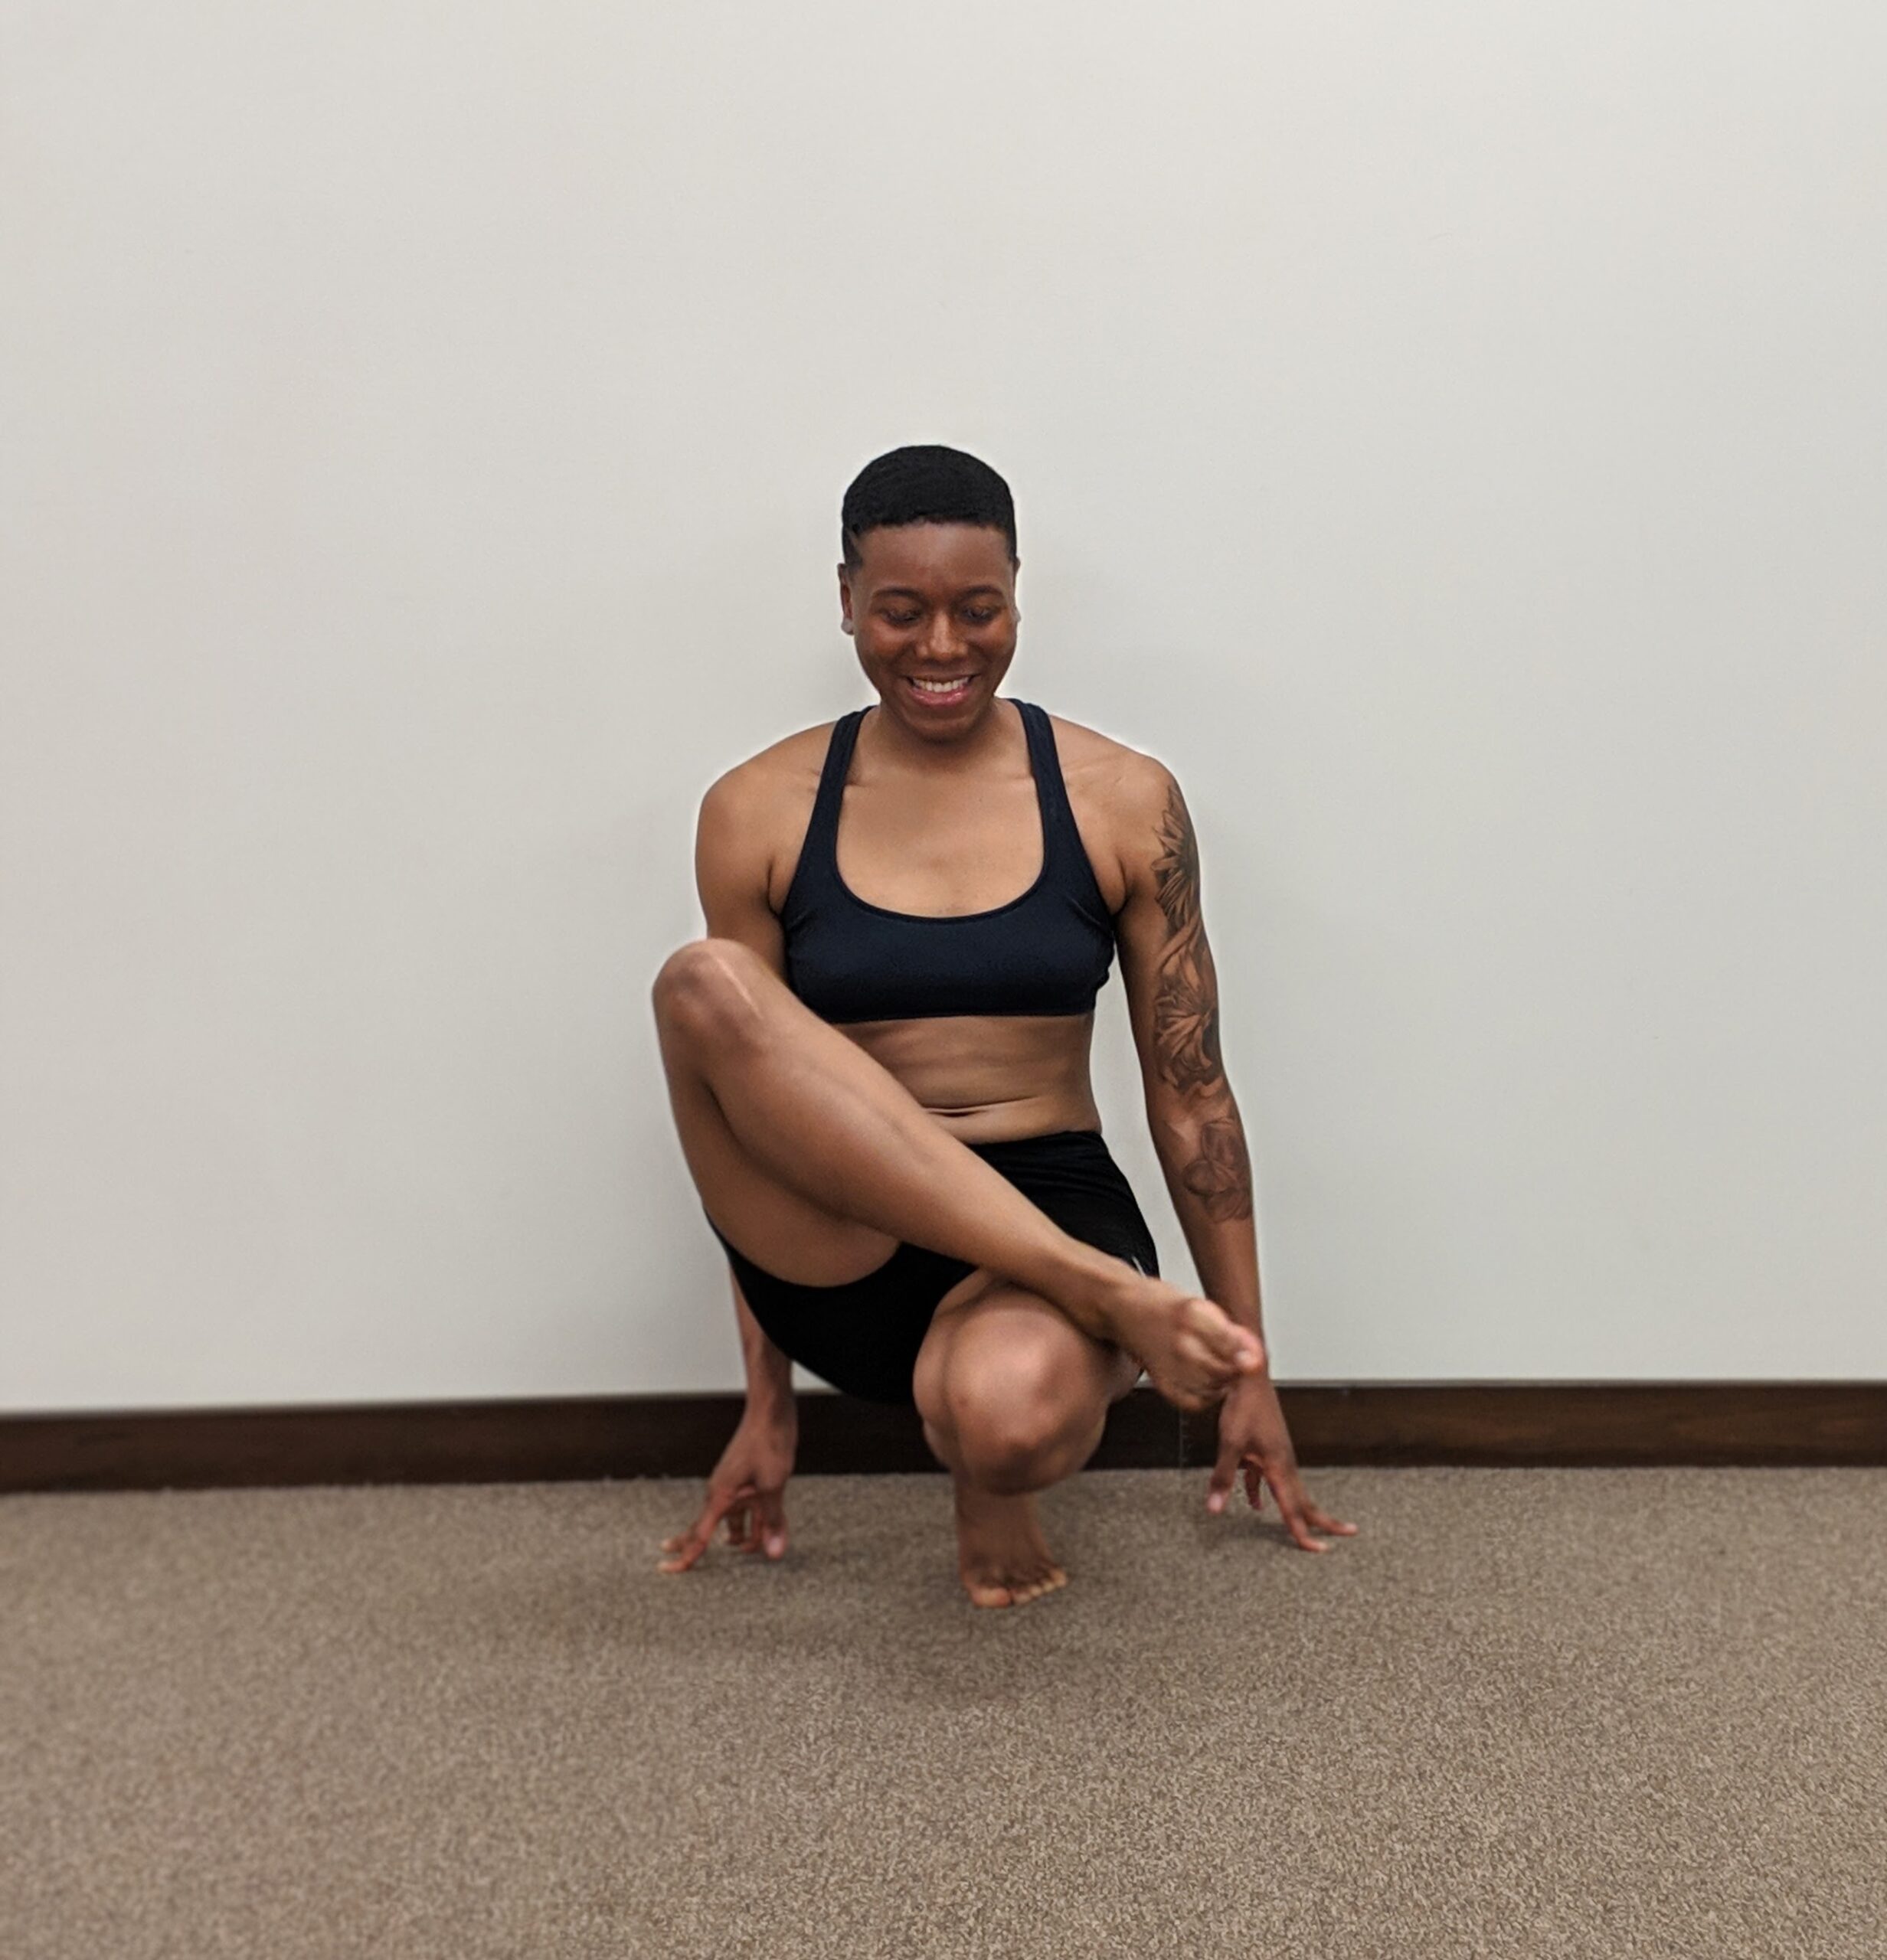 Hot 'n' Healthy: Balancing Stick Pose offers strength, balance